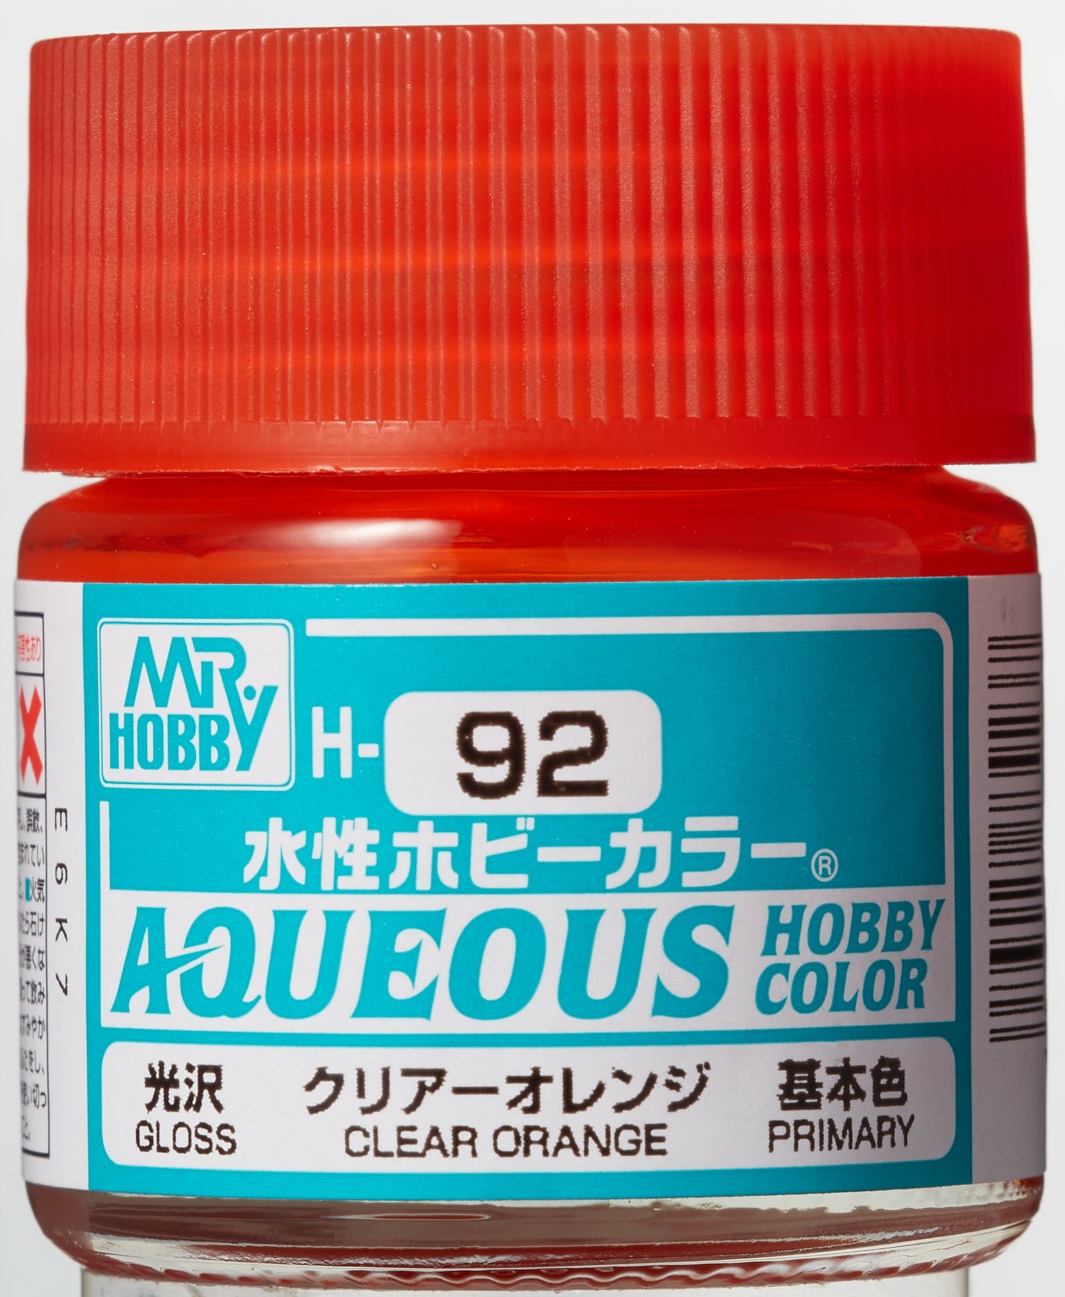 Mr. Aqueous Hobby Color - Clear Orange - H92 - Orange Transparent